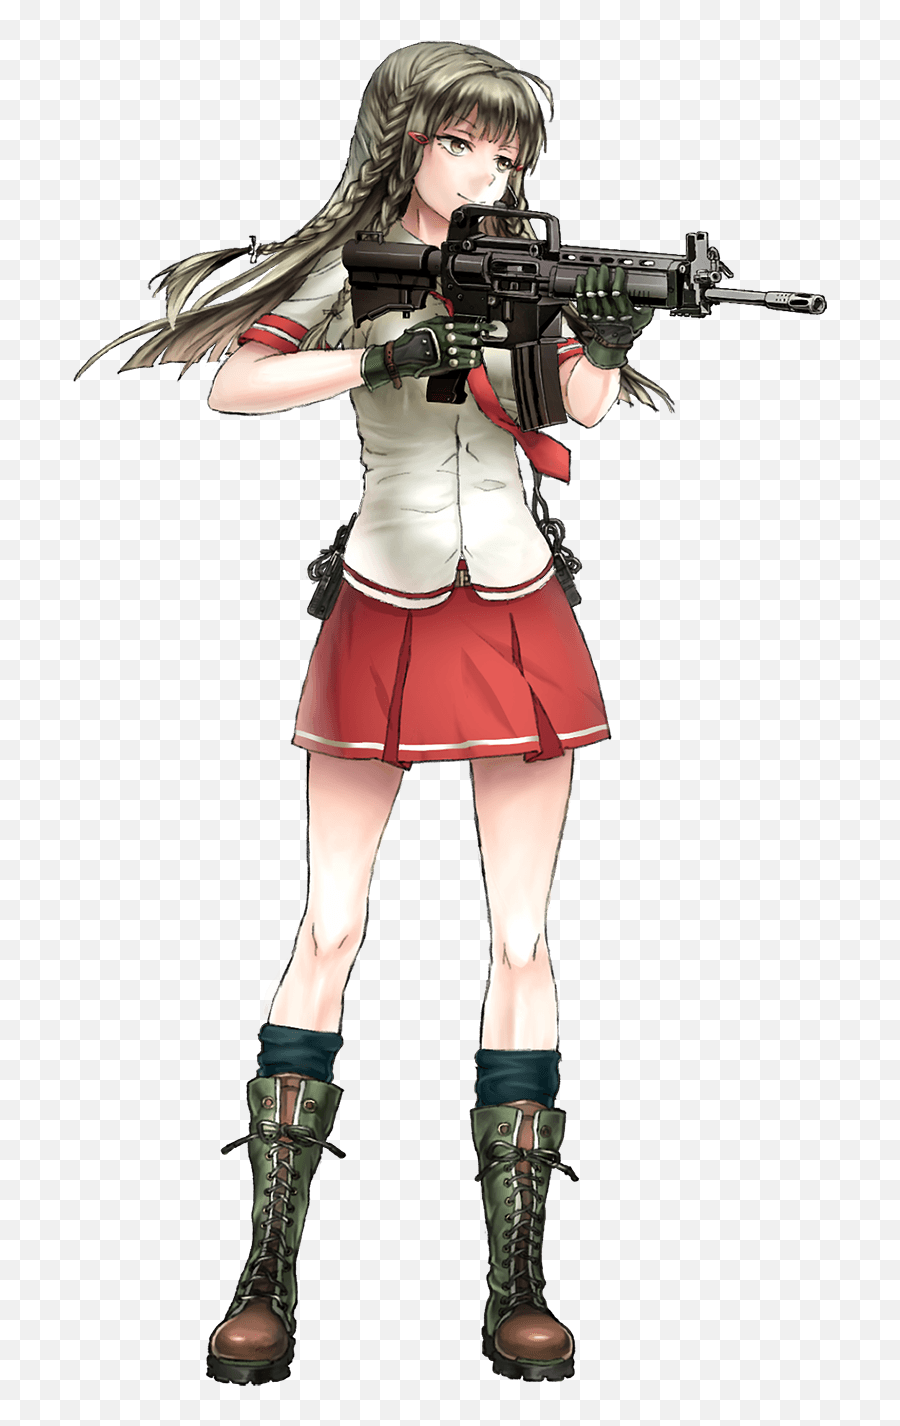 Download T91assaultriflenormal - Cartoon Girl Shooting Gun Anime Girl Gun Png,Cartoon Gun Png